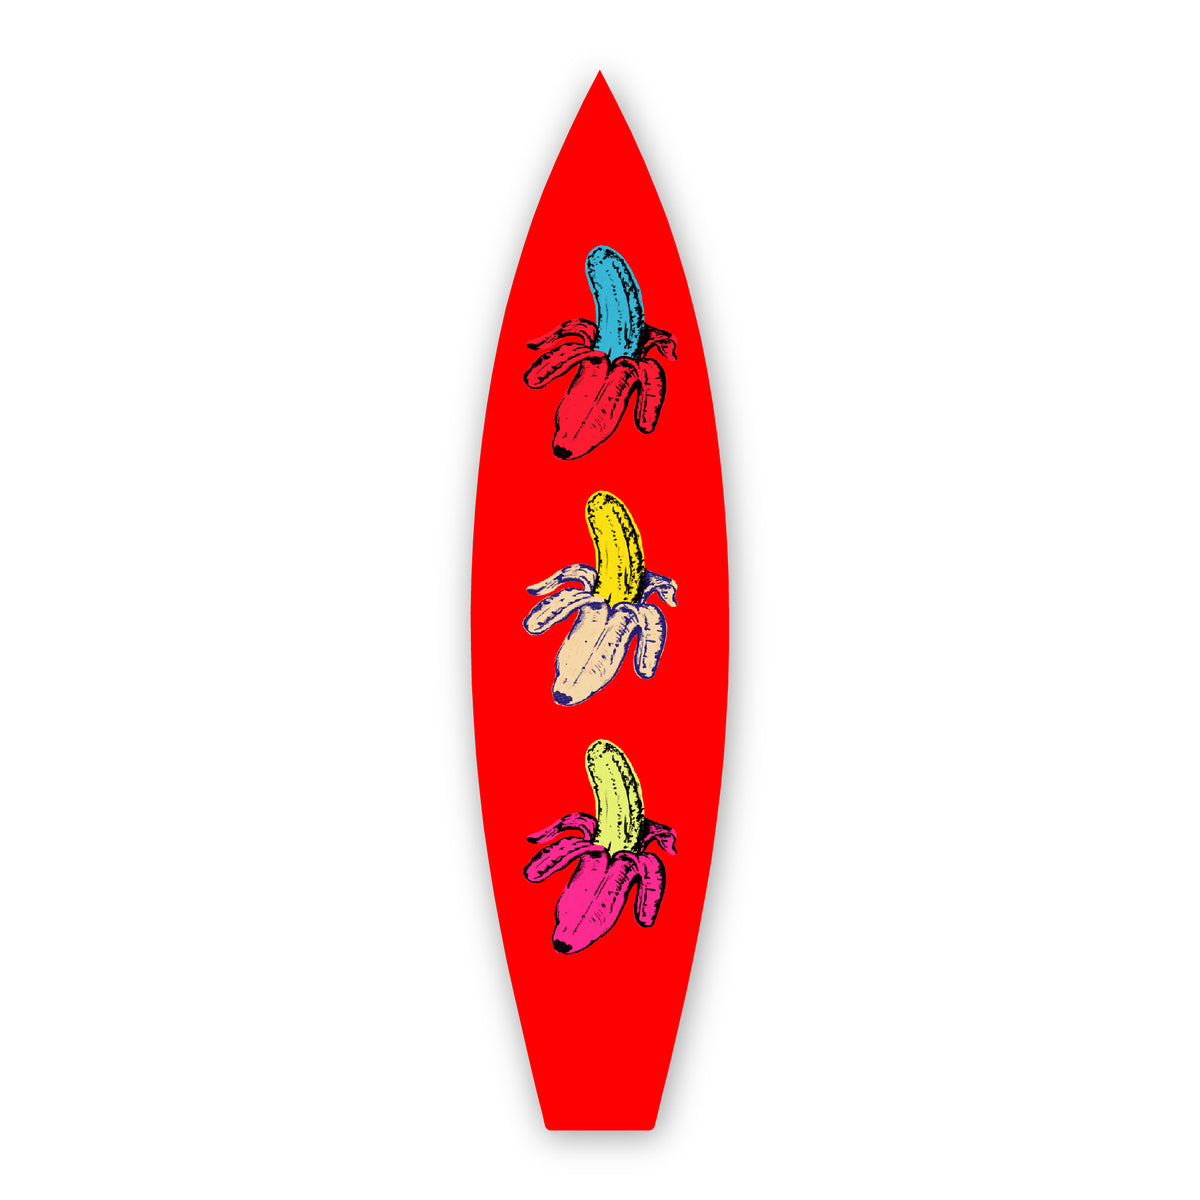 Retro Banana - Surfboard Art